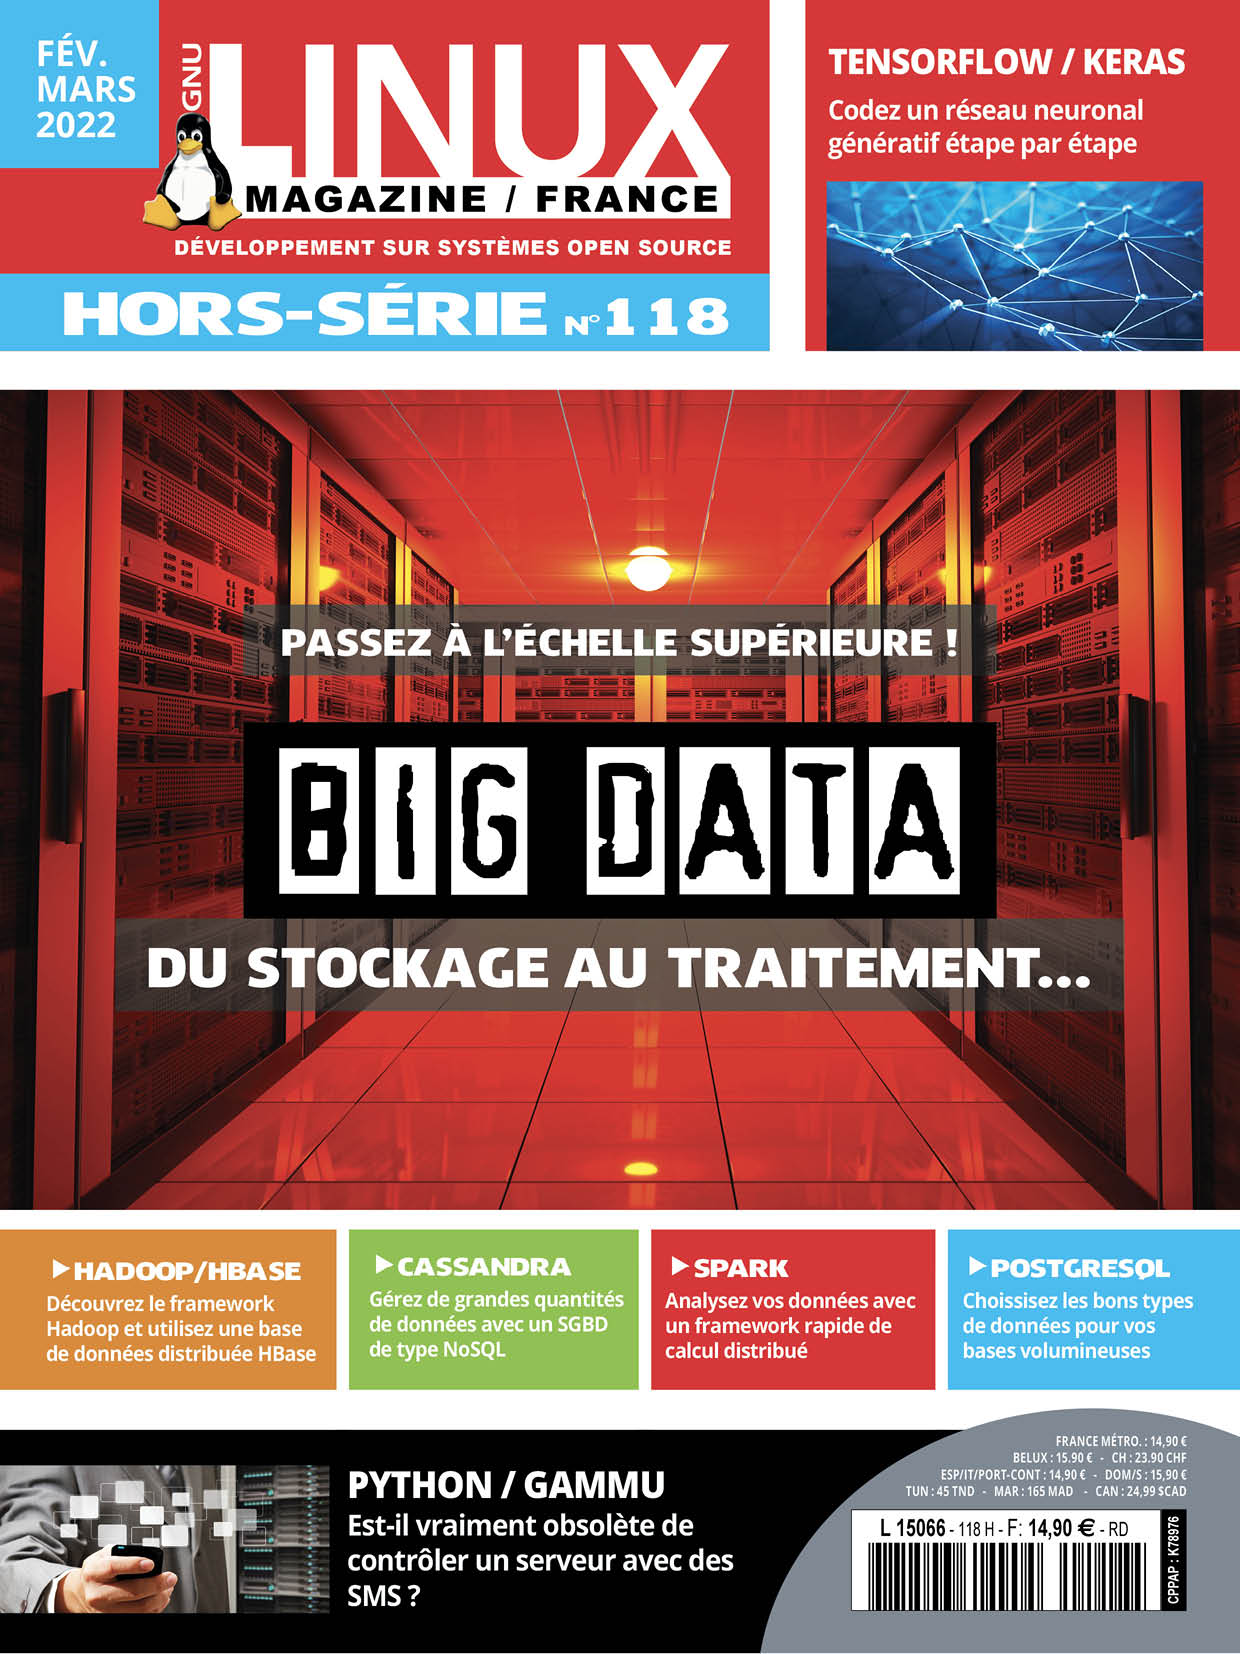 Big data - Du stockage au traitement...